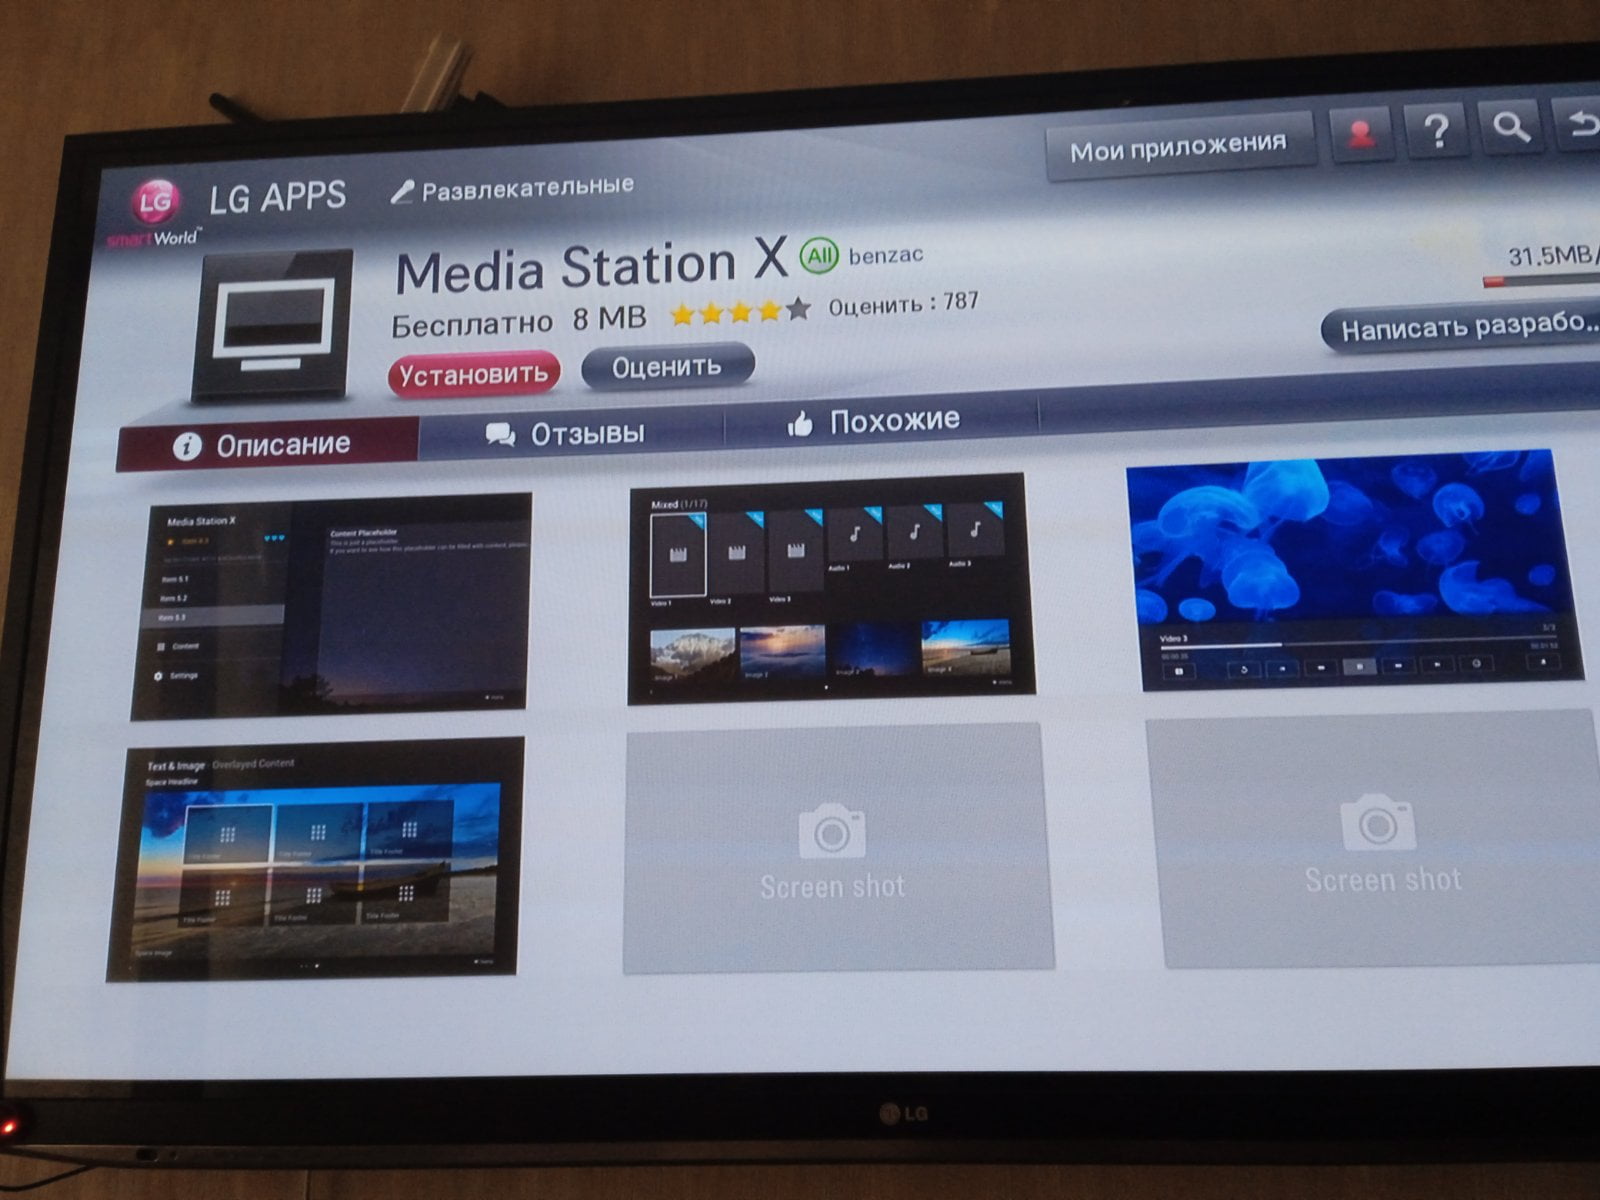 Описание Media Station X